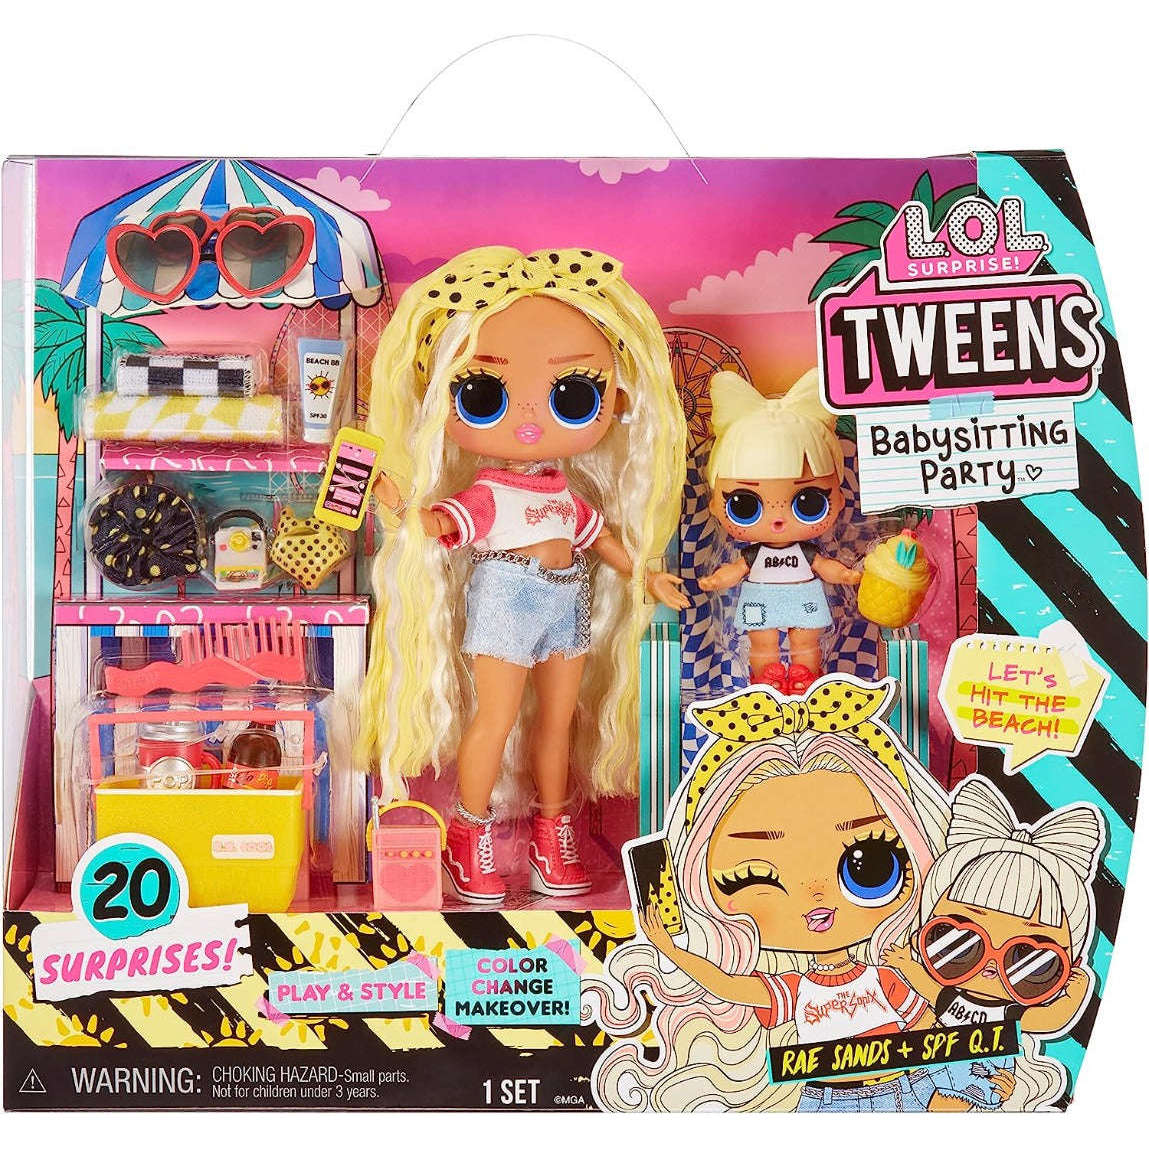 Toys N Tuck:LOL Surprise! Tween Babysitting Beach Party Rae Sands & Spf Q.T.,LOL surprise